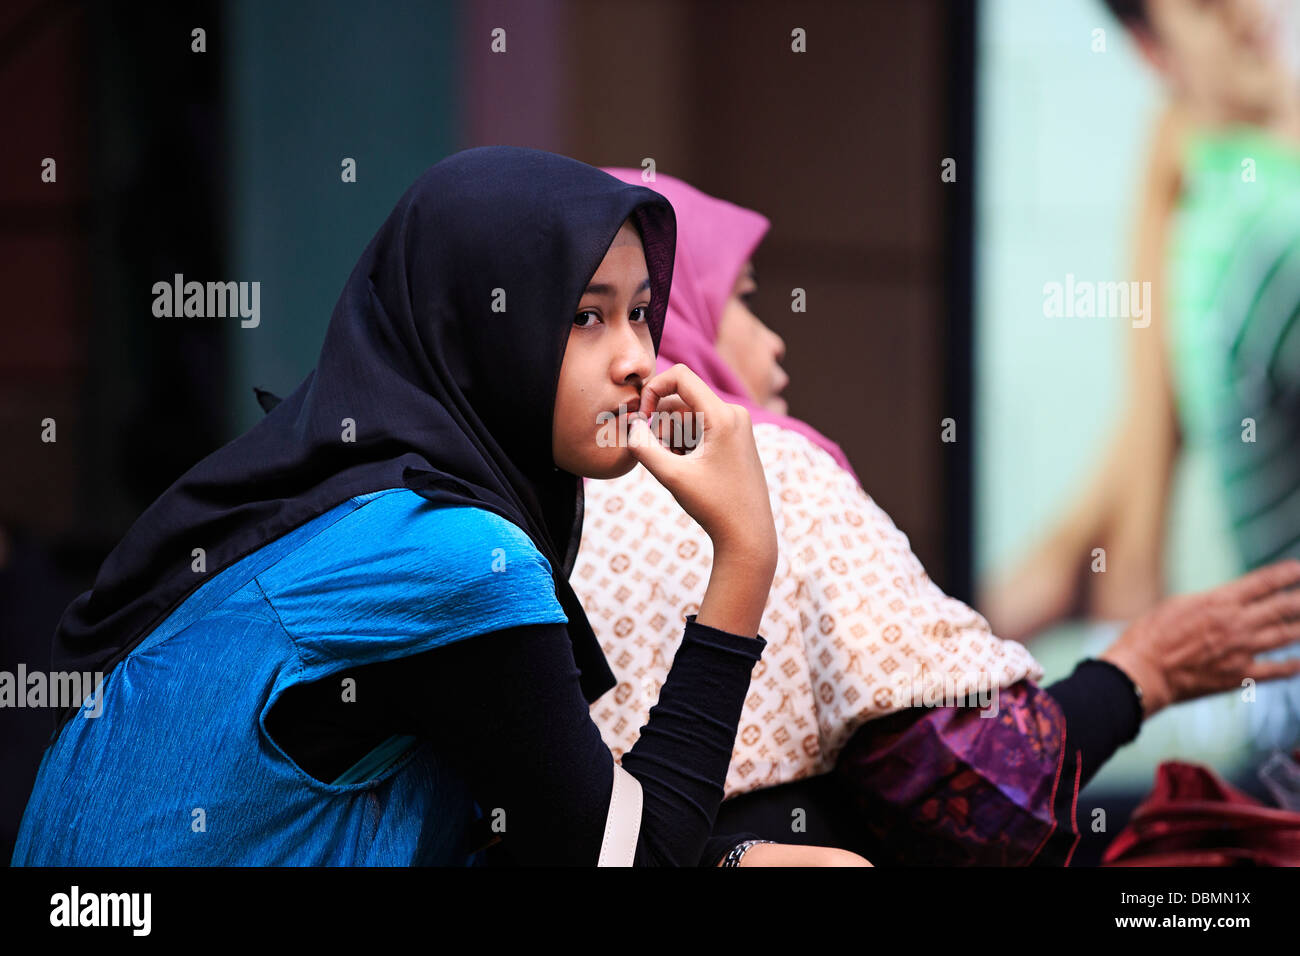 Malaysian Girl High Resolution Stock Photography And Images Alamy